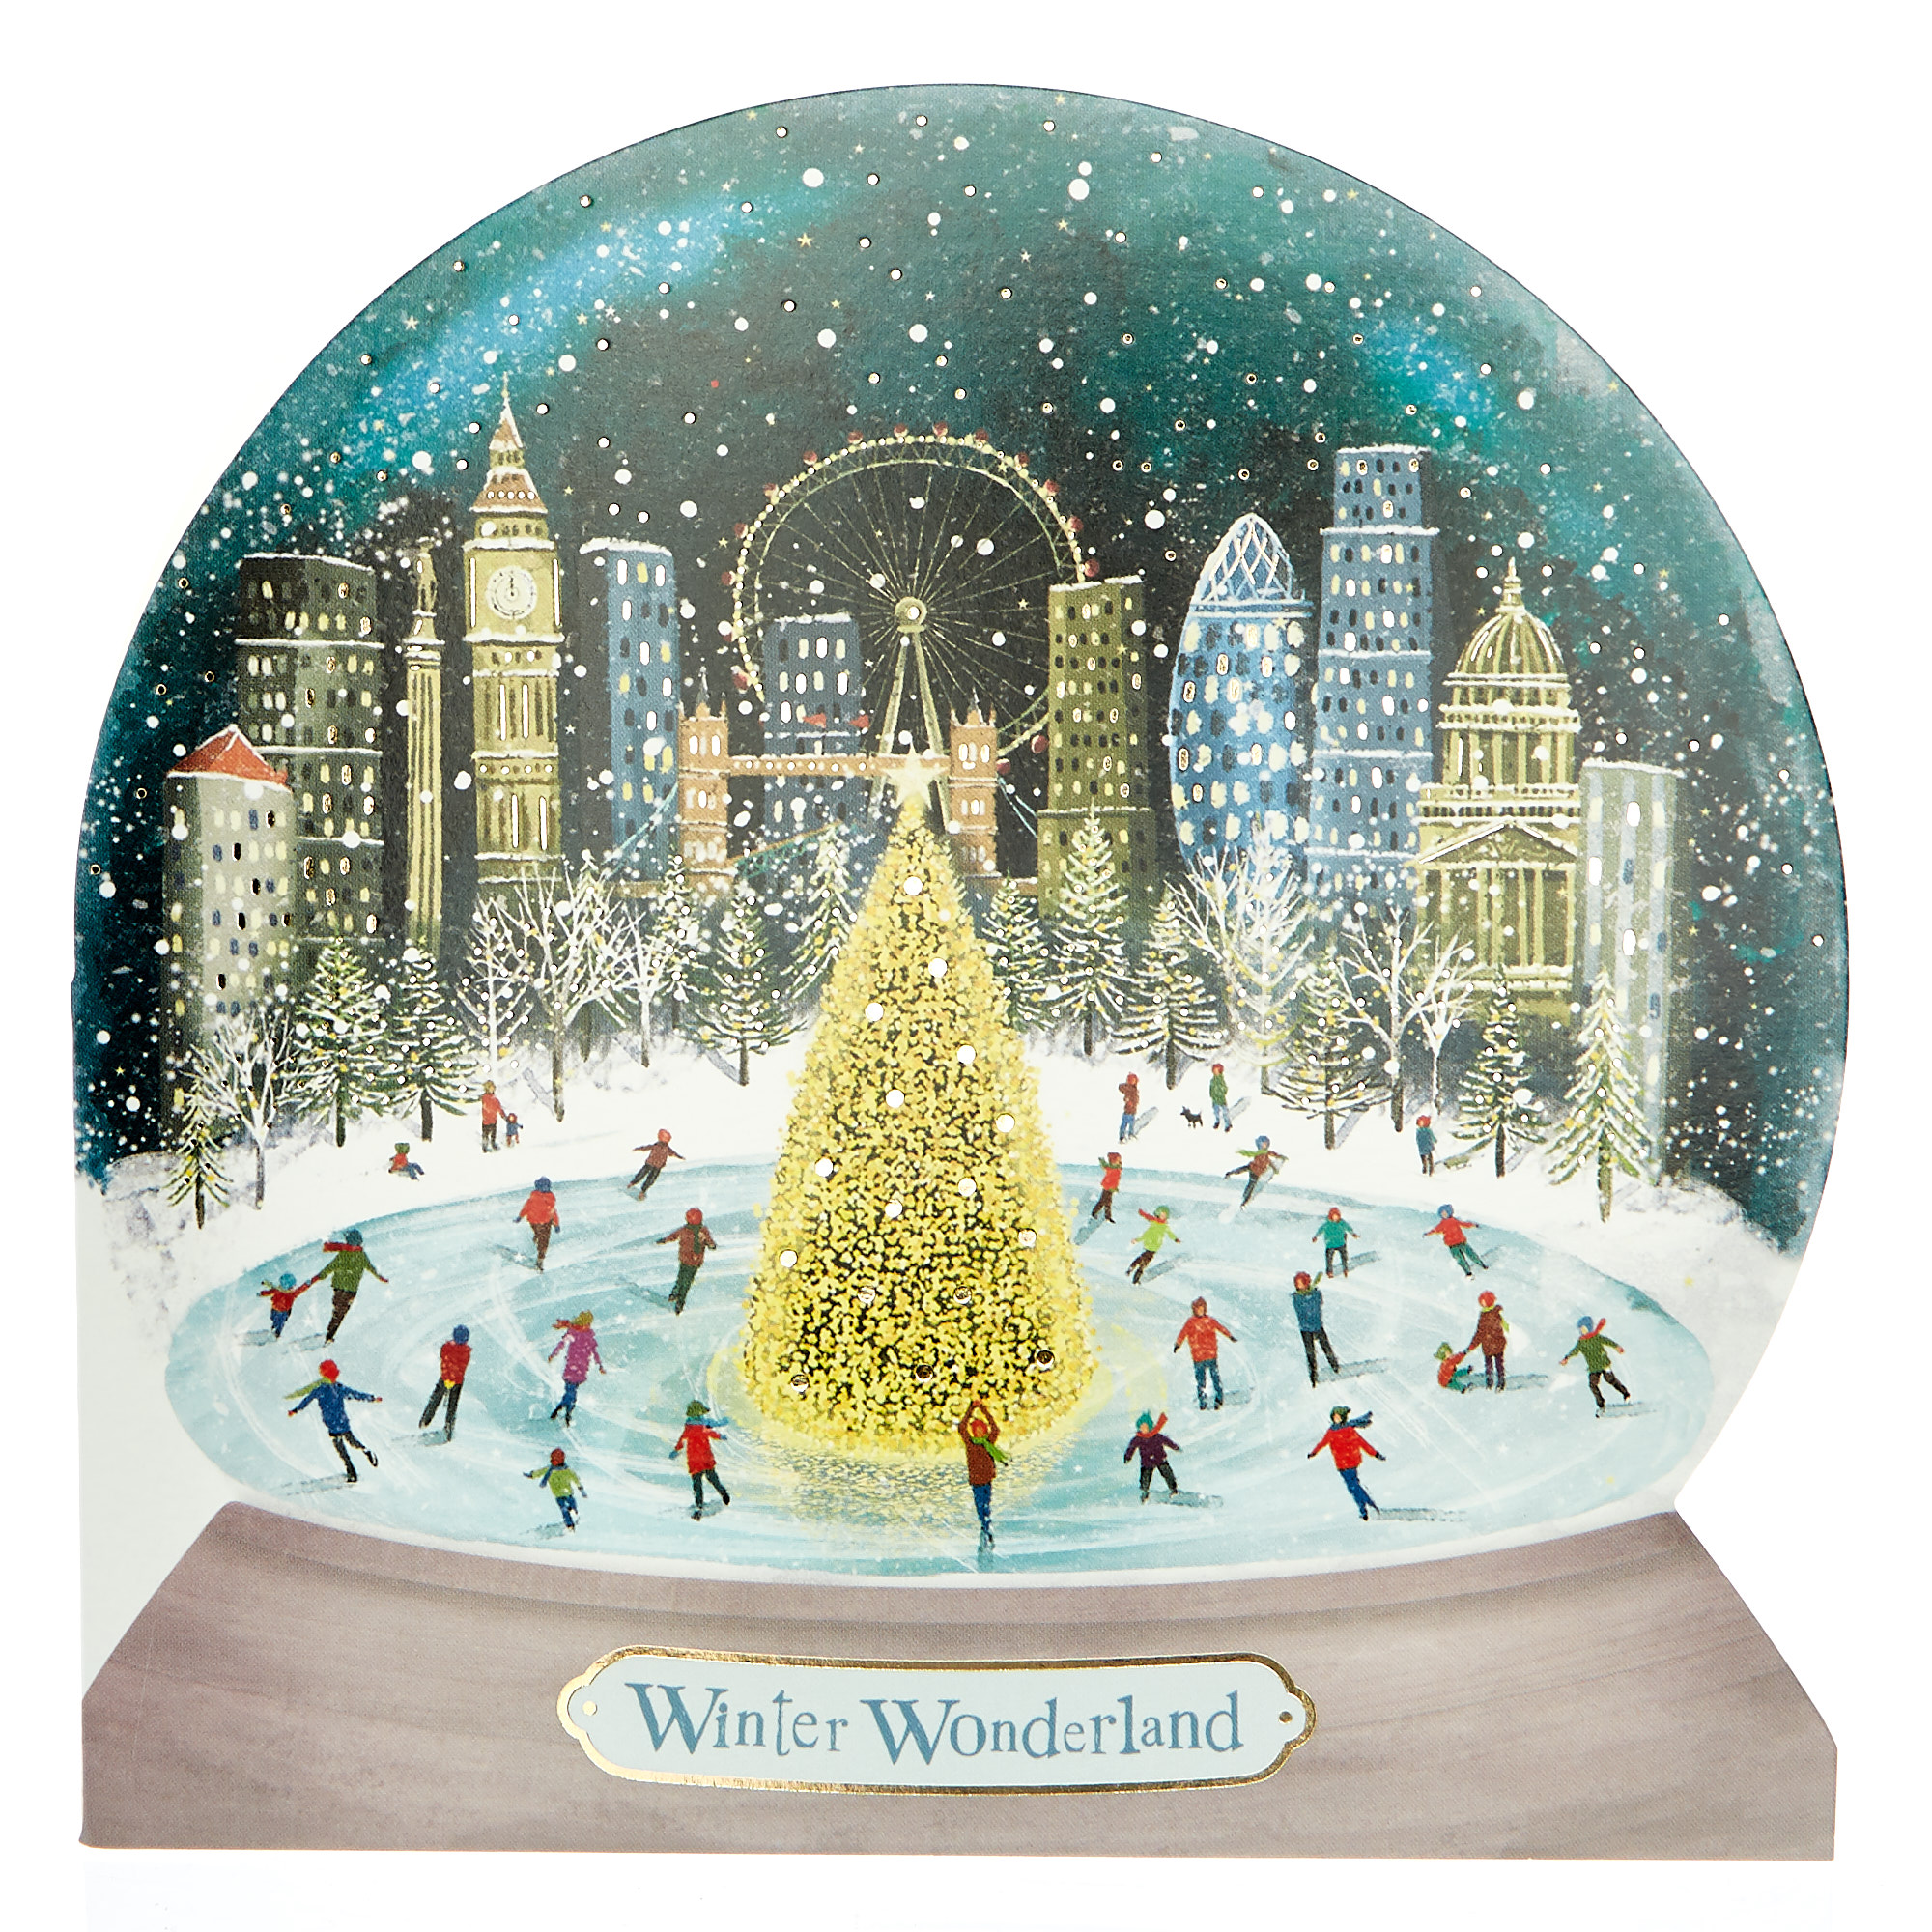 16 Snow Globe Charity Christmas Cards - 2 Designs 